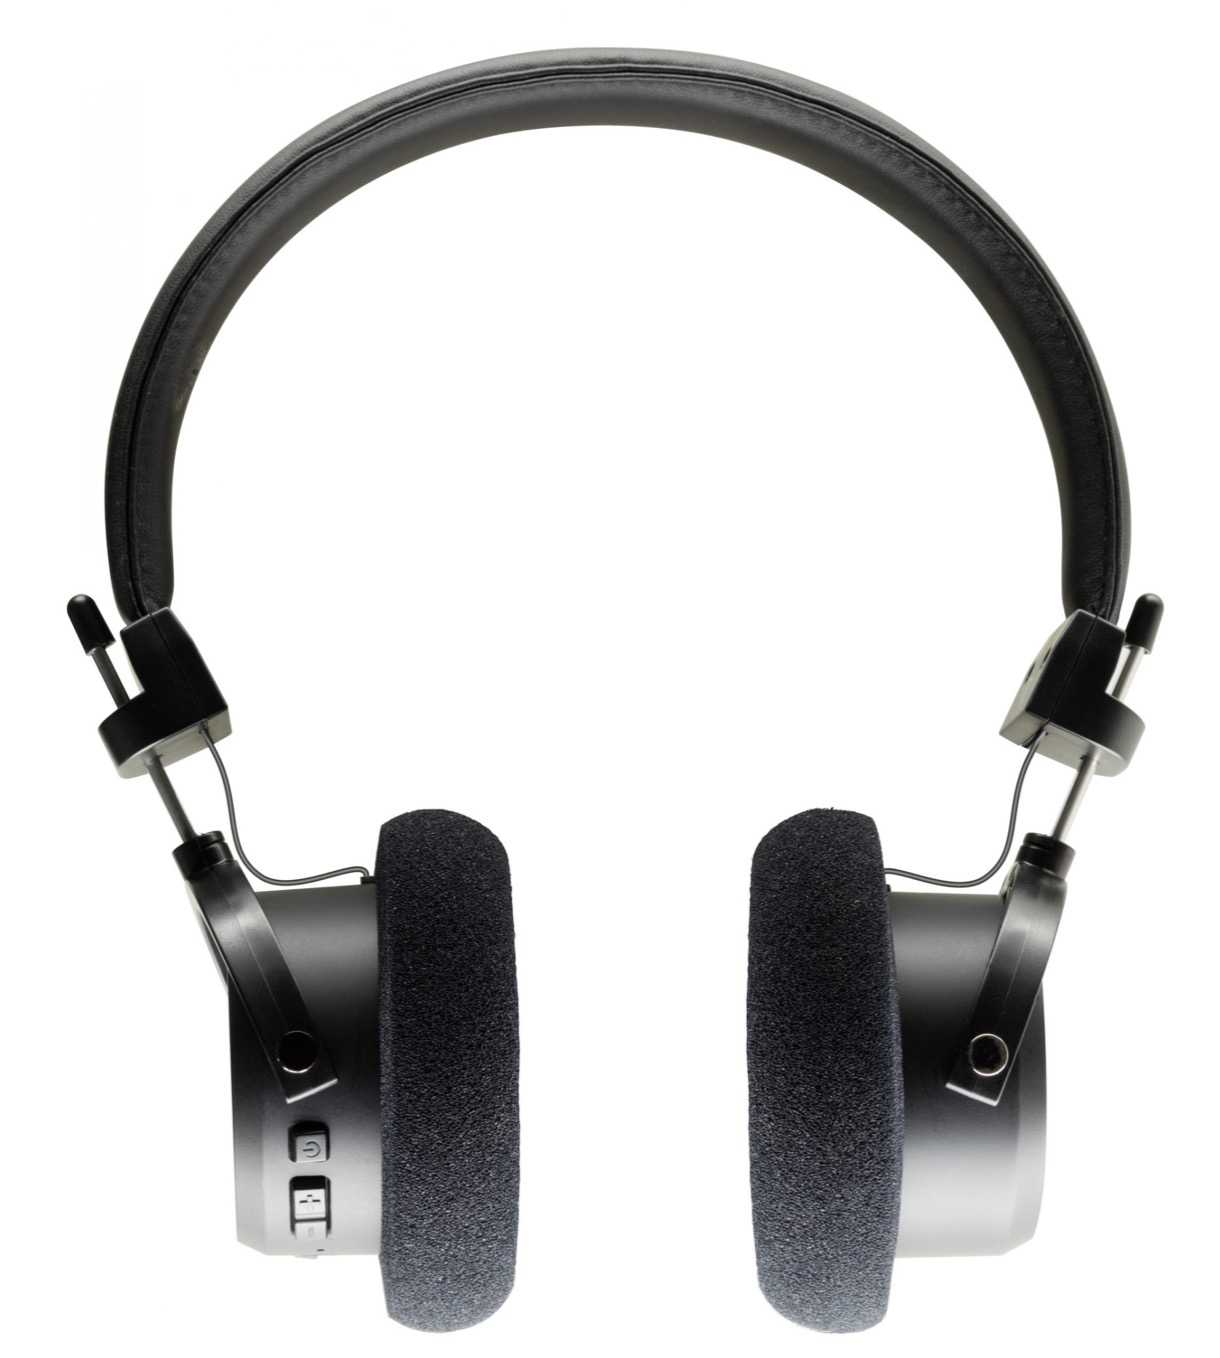 GW100x headphones from Grado